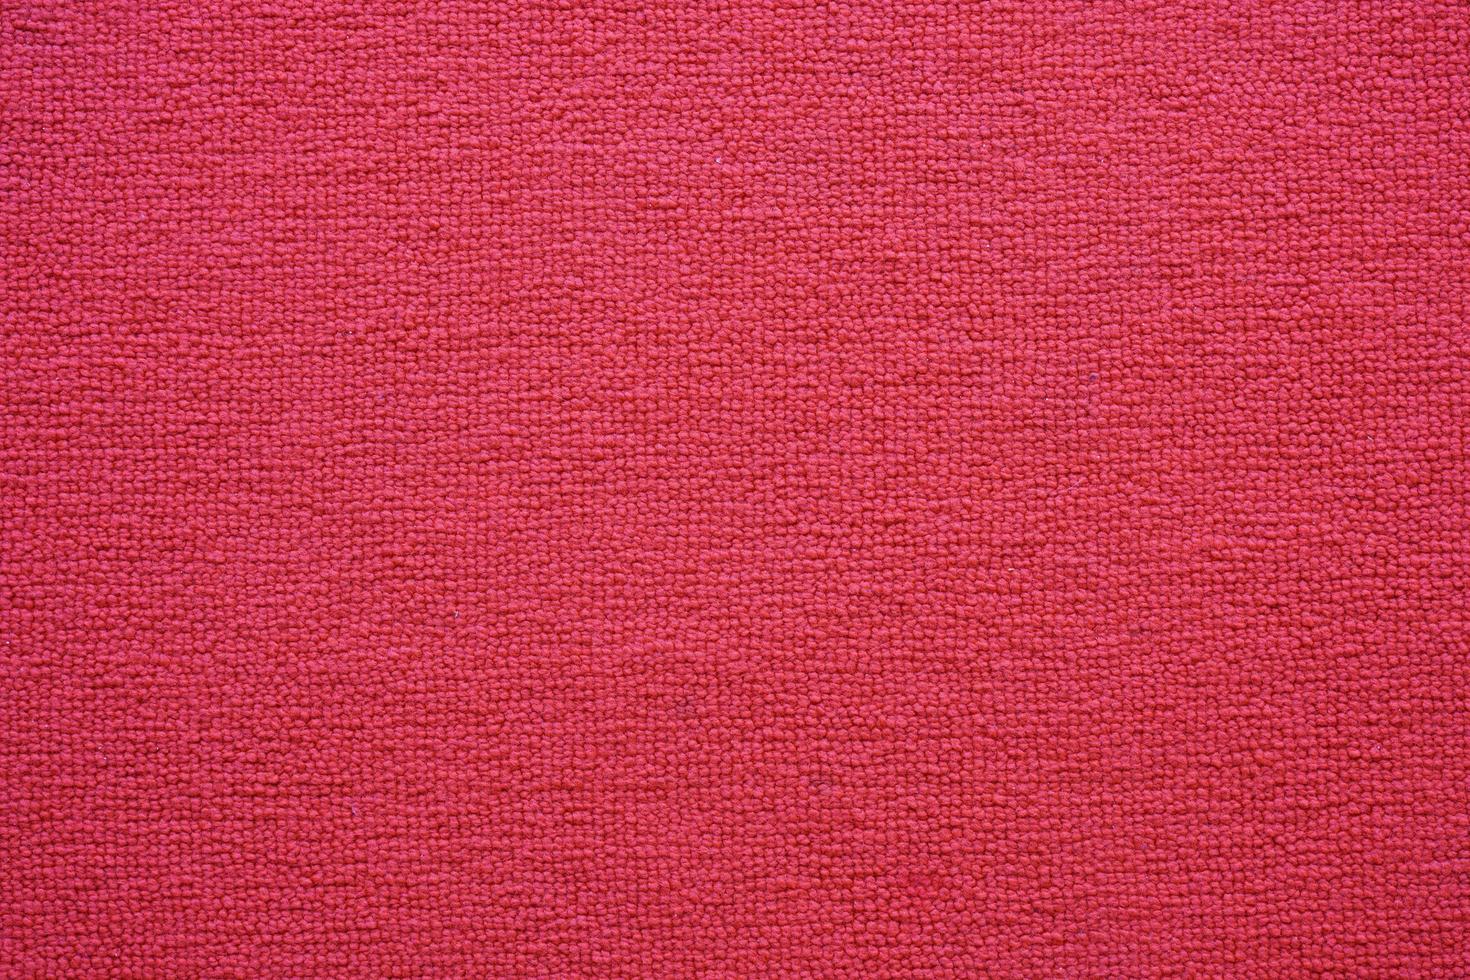 primer plano, alfombra roja, textura foto